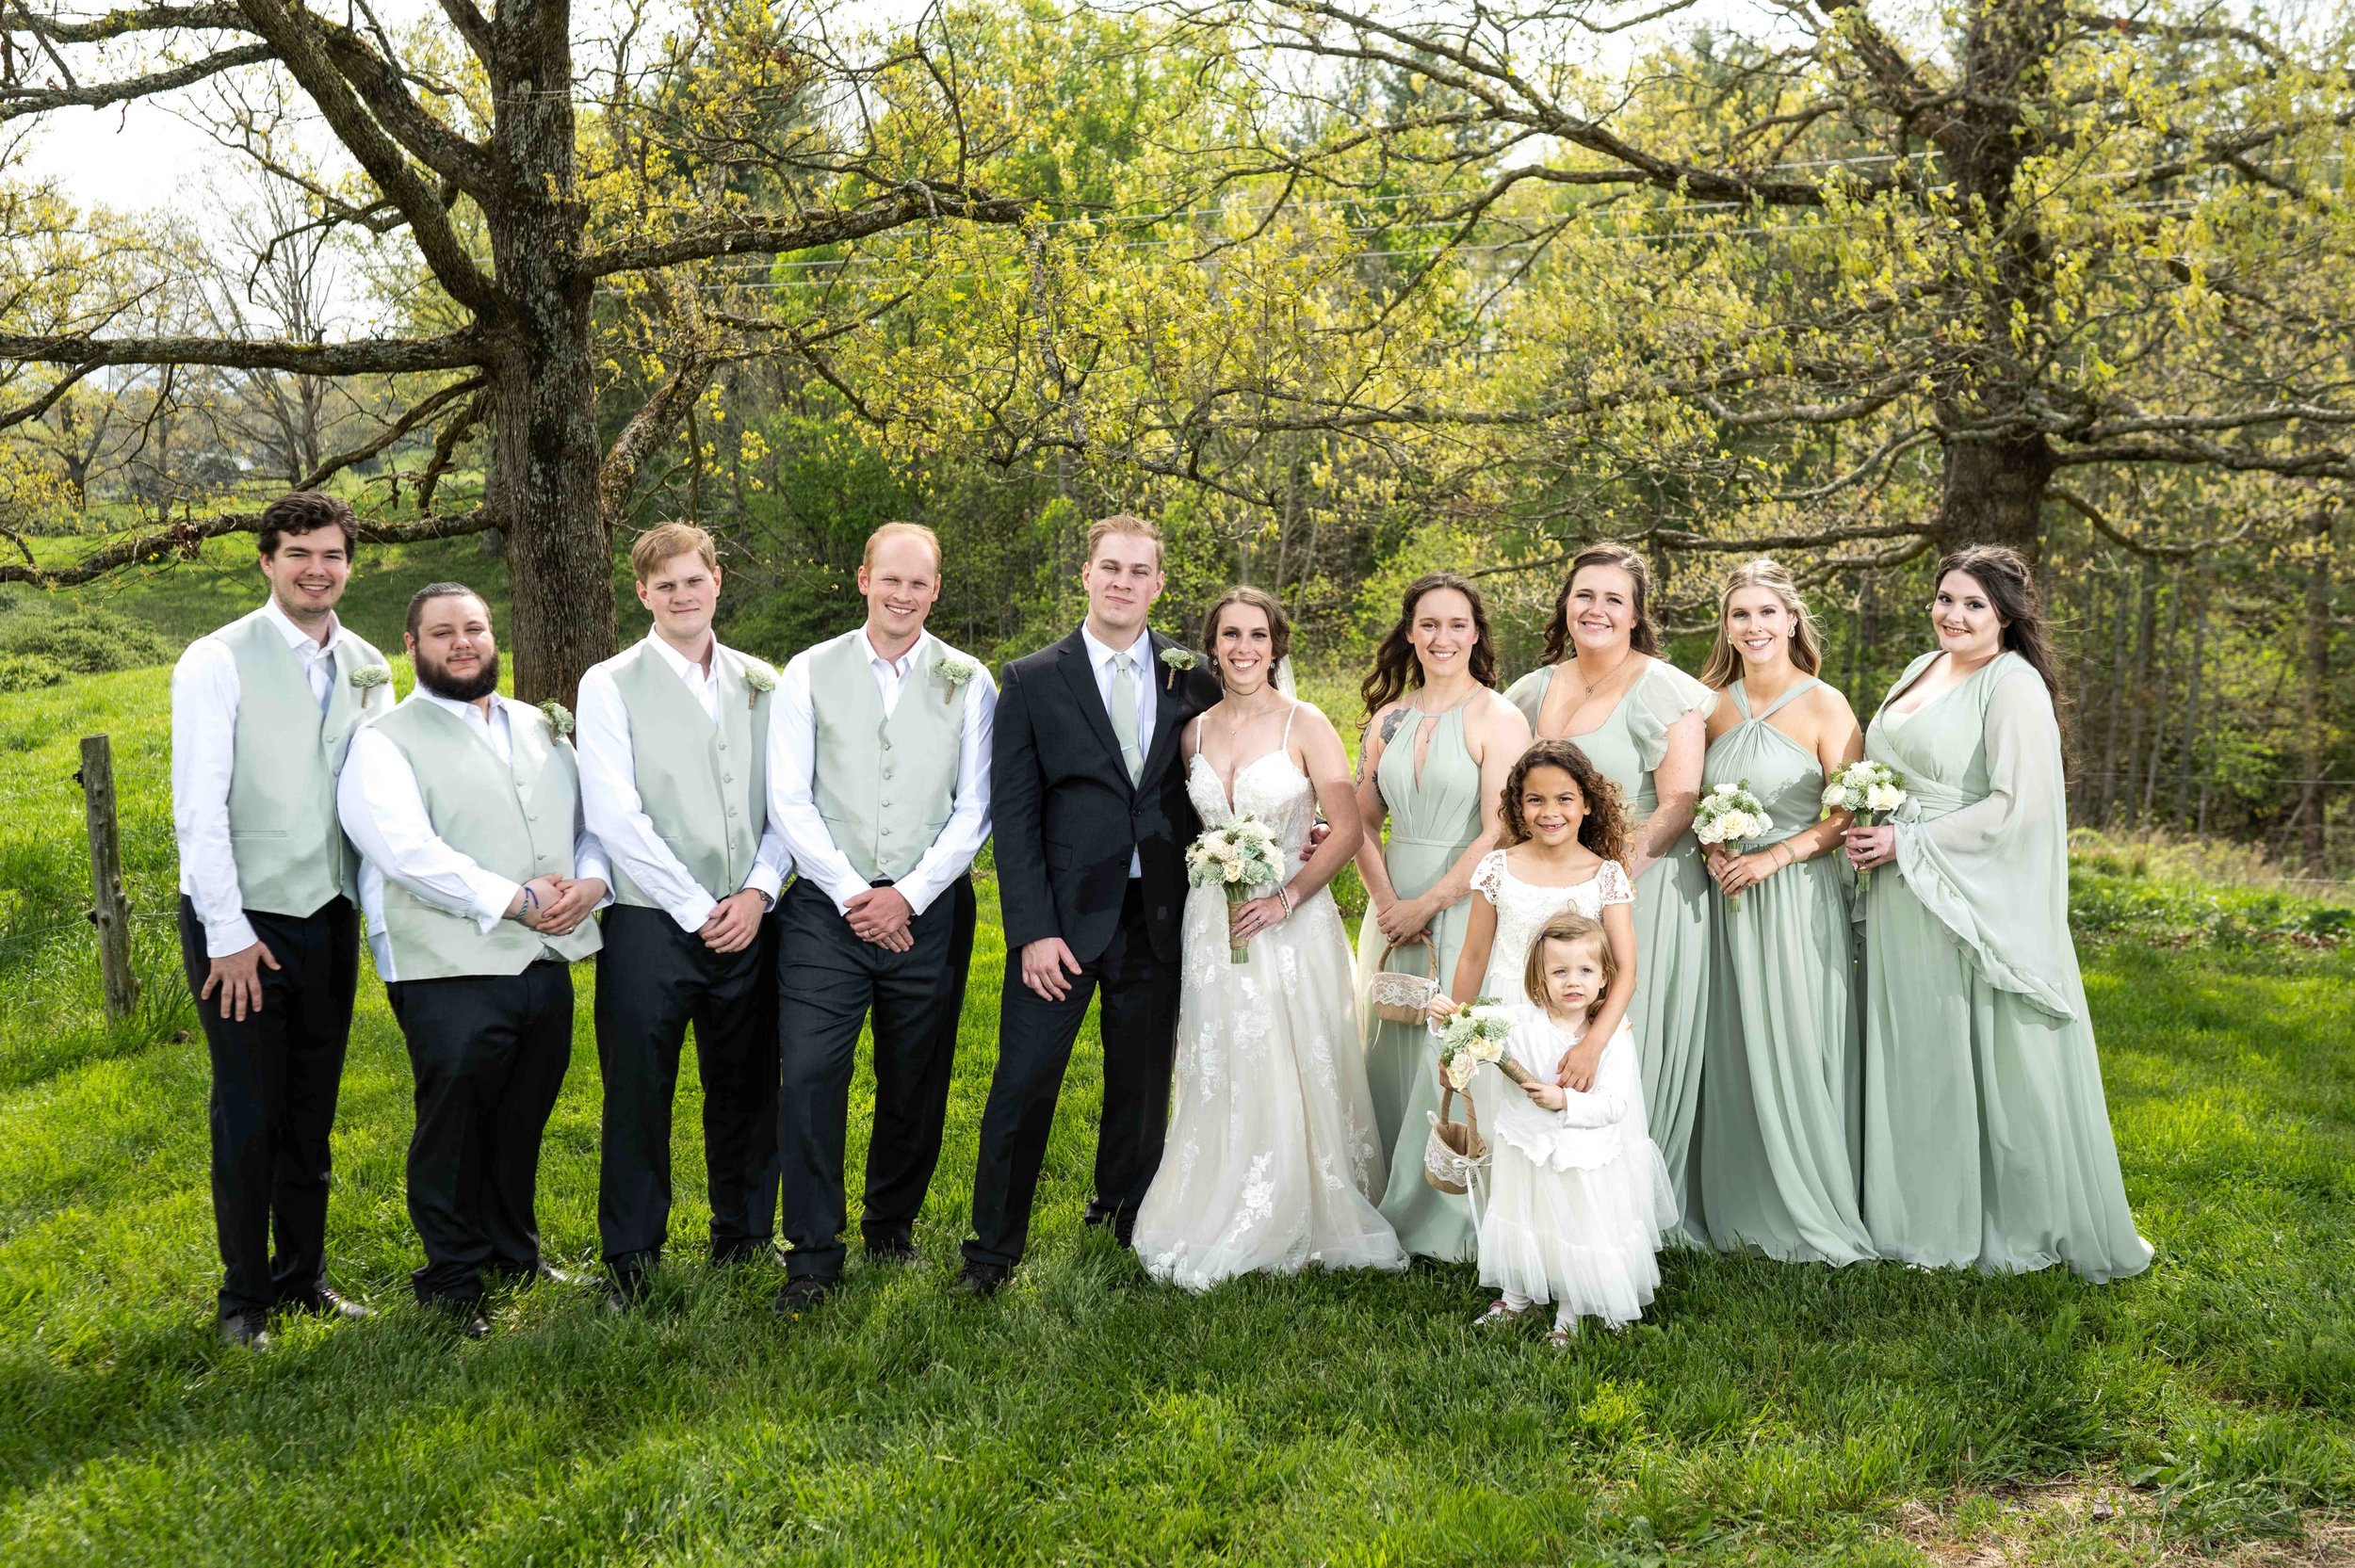 Outdoor April Wedding in Asheville North Carolina at Emerald Ridge Farm & Event Center blog 2 7.jpg